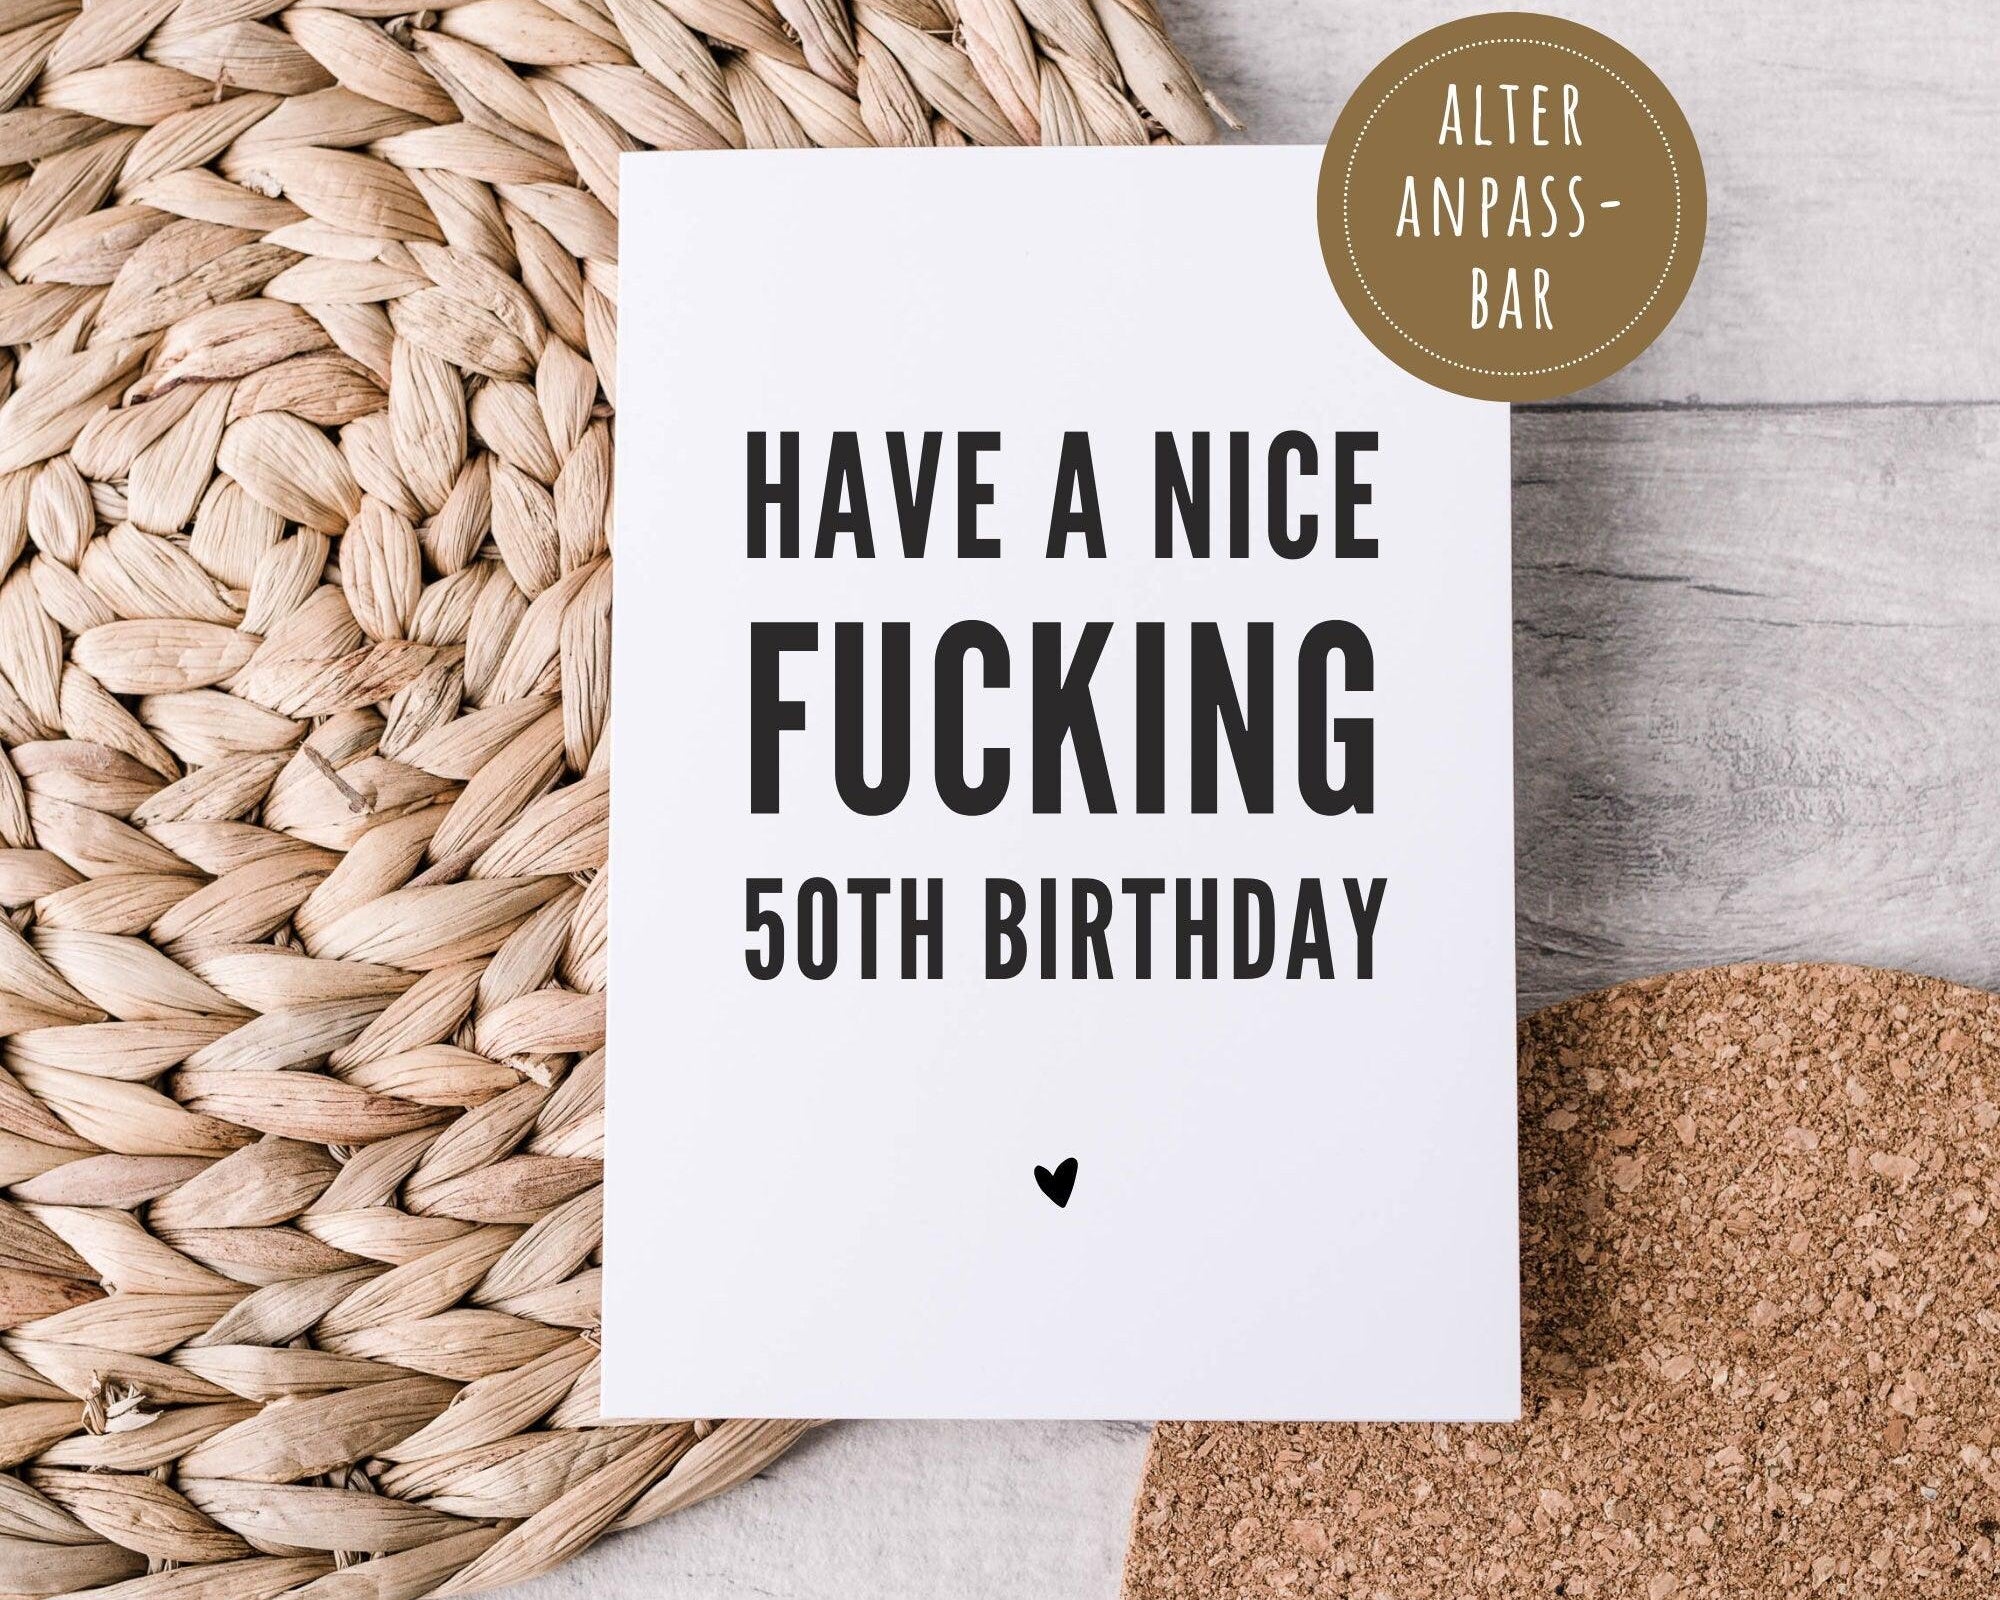 Duftkerze im Glas | Geburtstag | Have a nice Fucking Birthday - Roo's Gift Shop